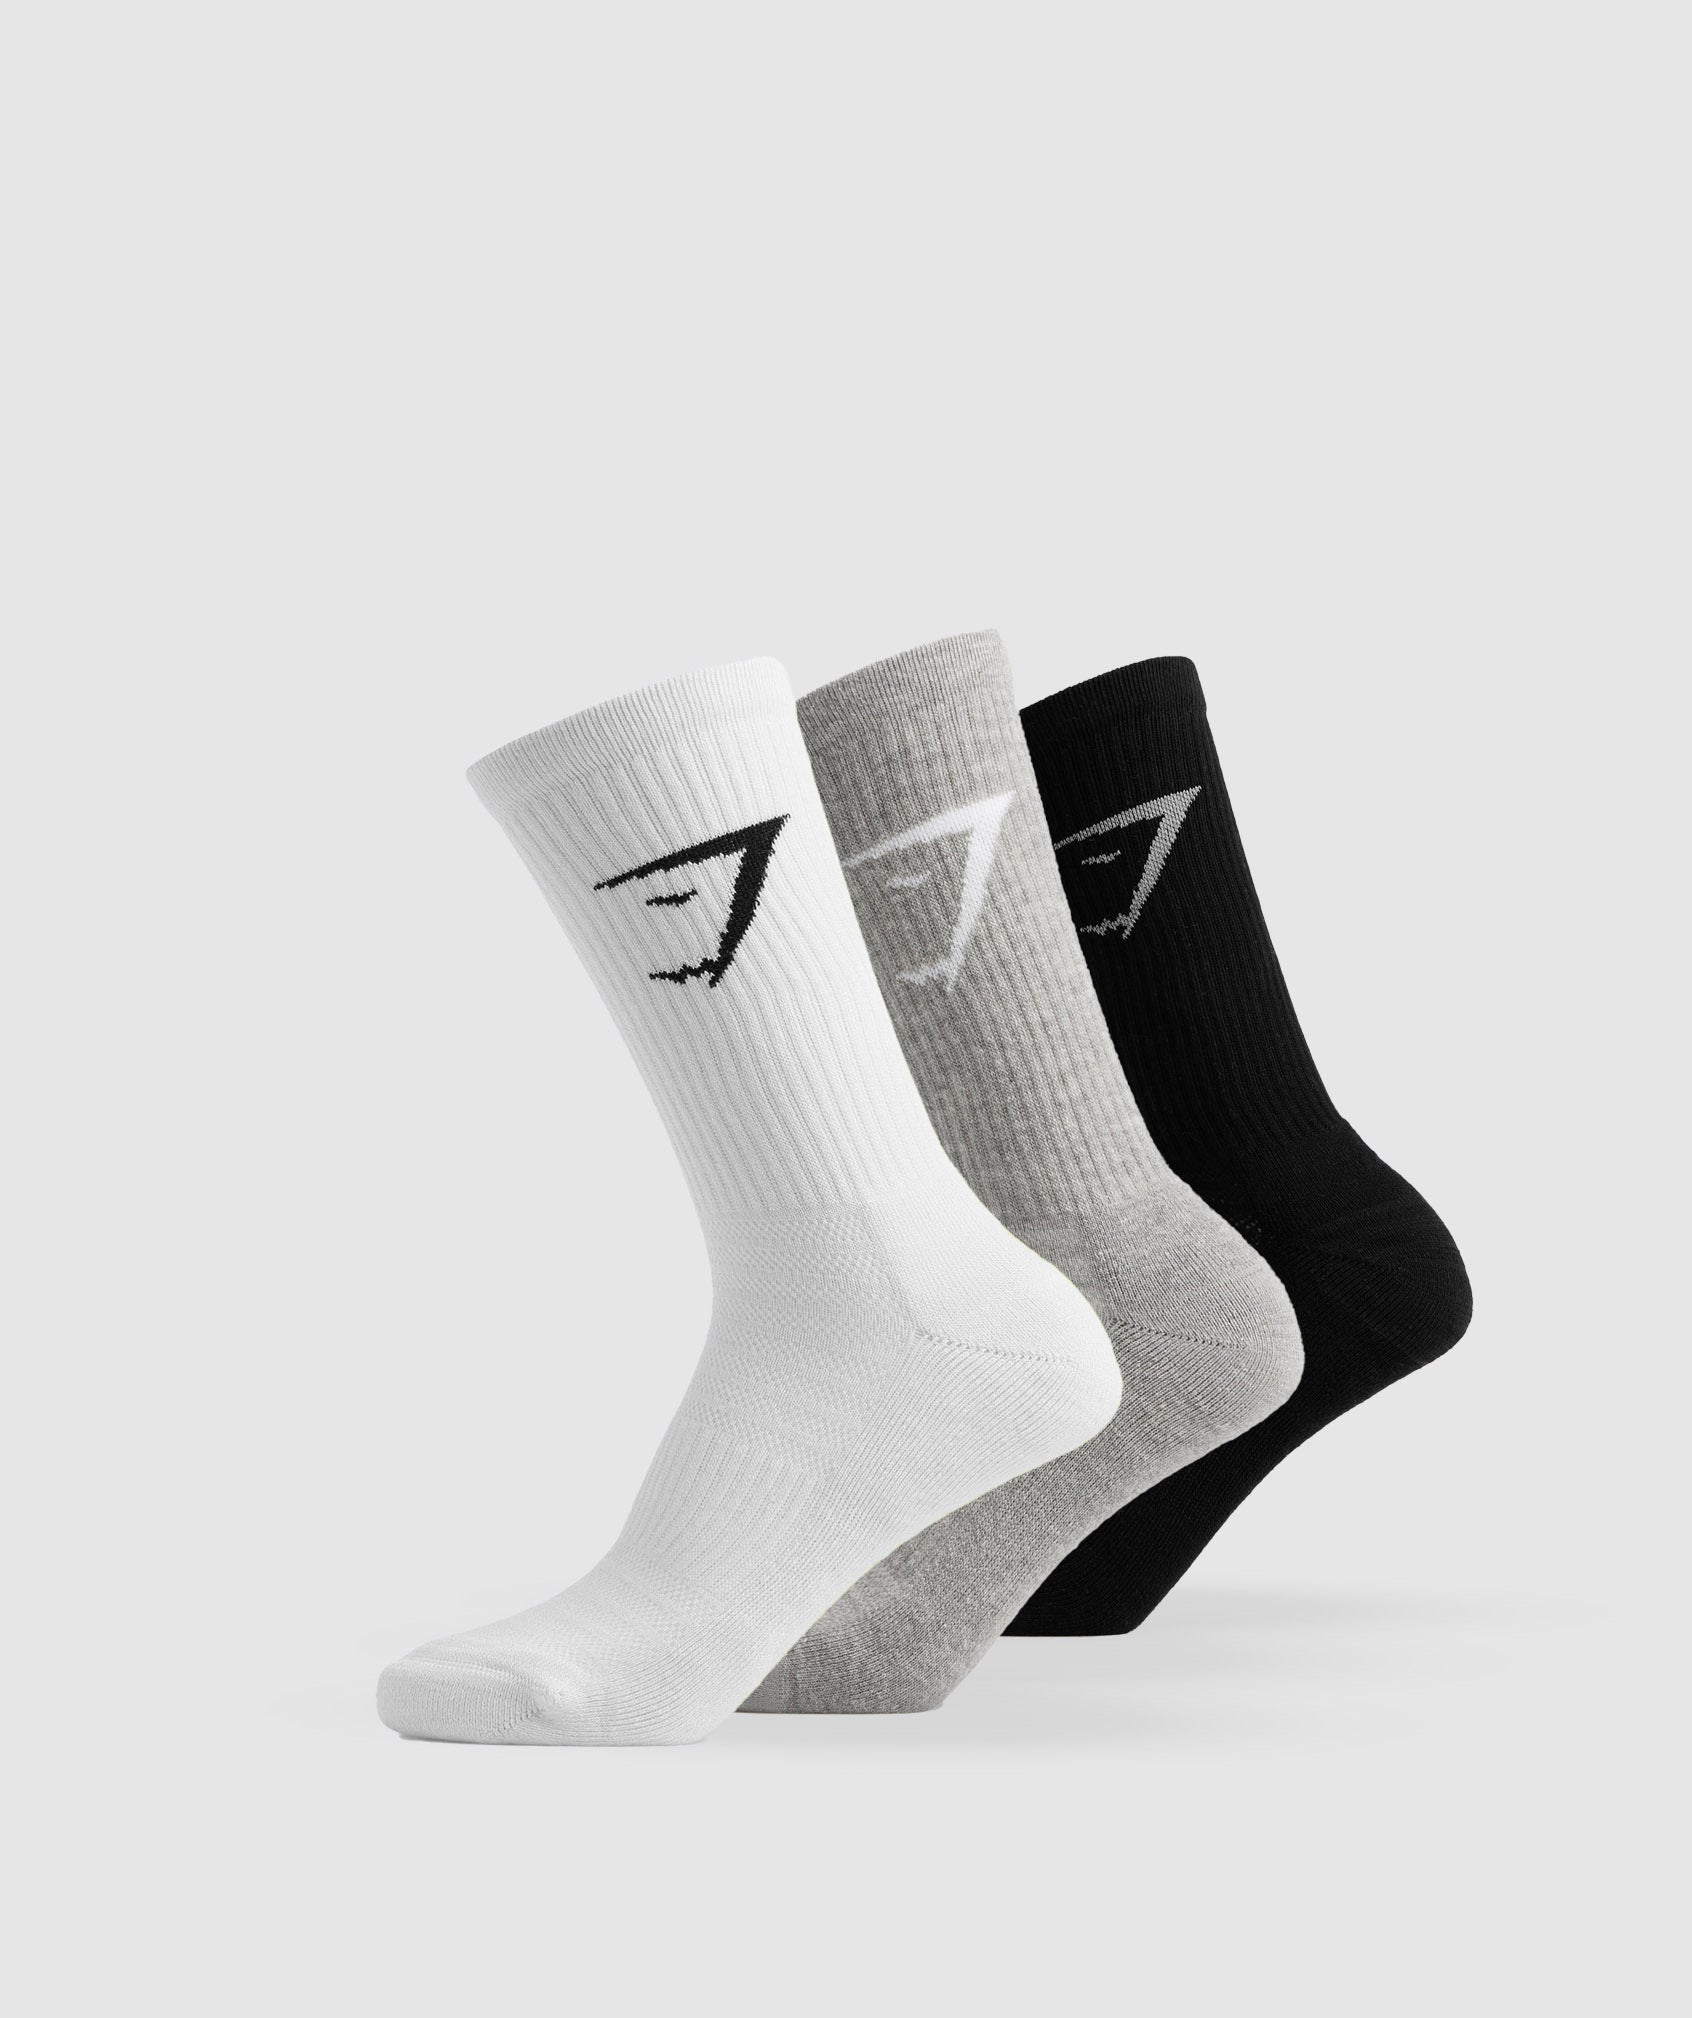 Crew Socks 3pk in White/Light Grey Marl/Black